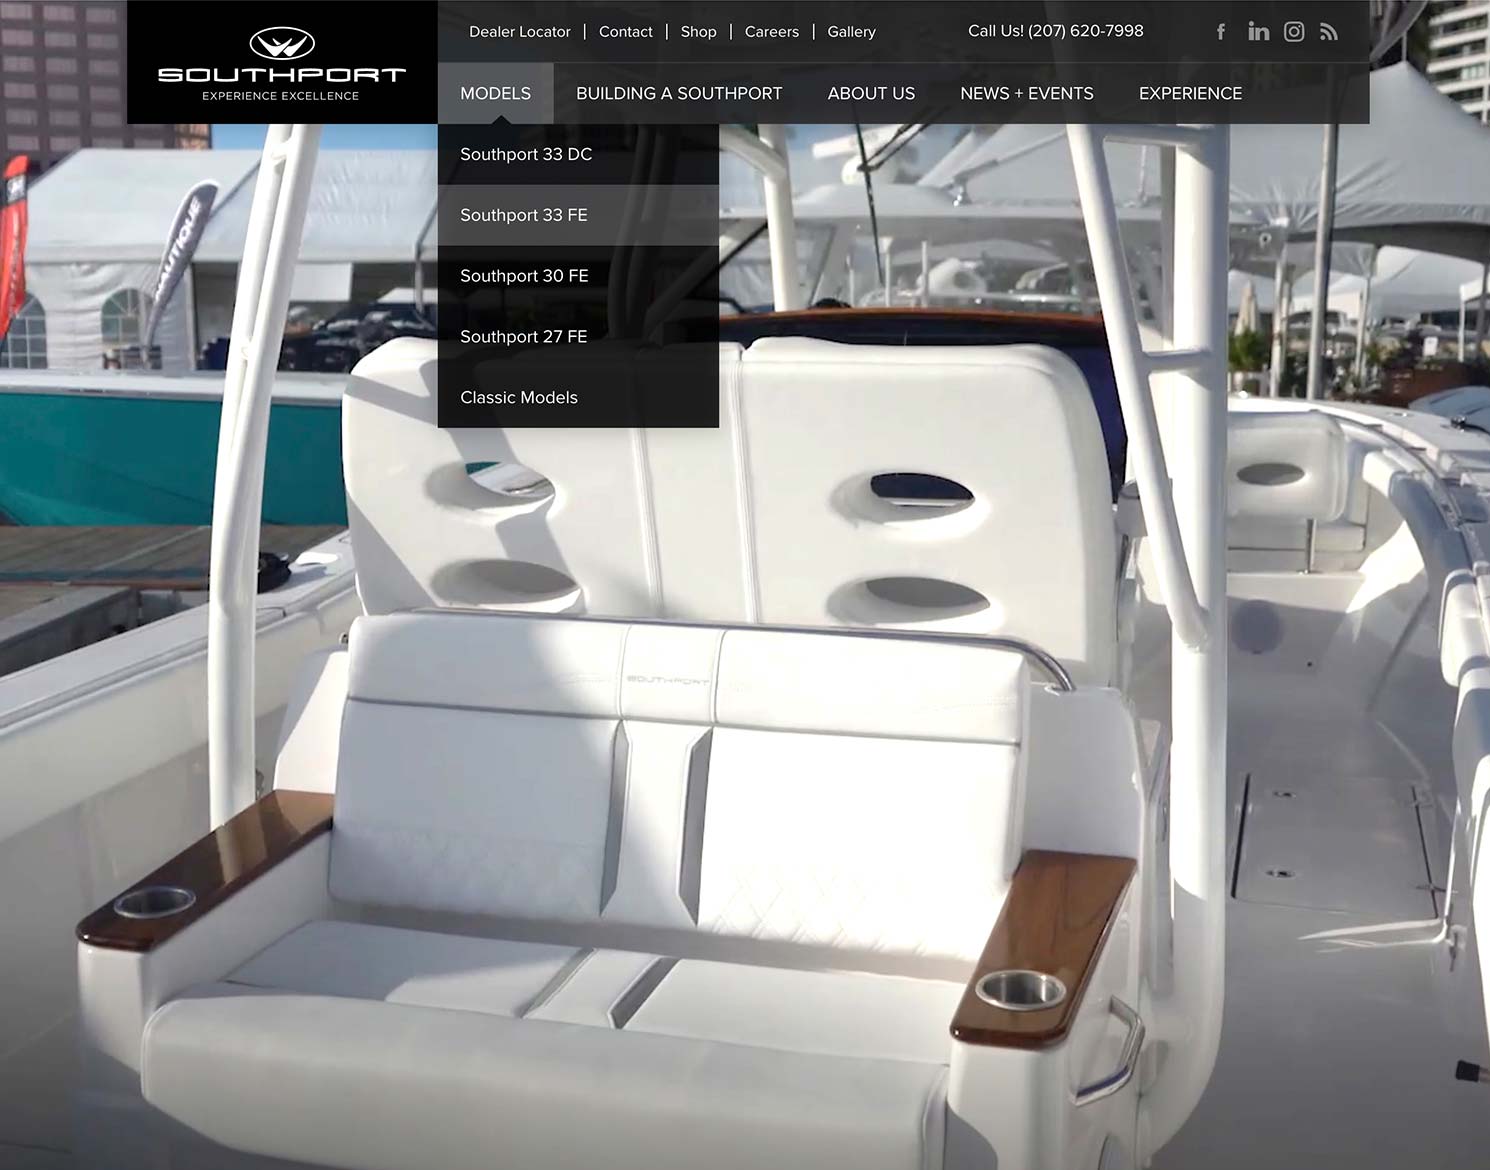 Southport Boats website design showing models dropdown